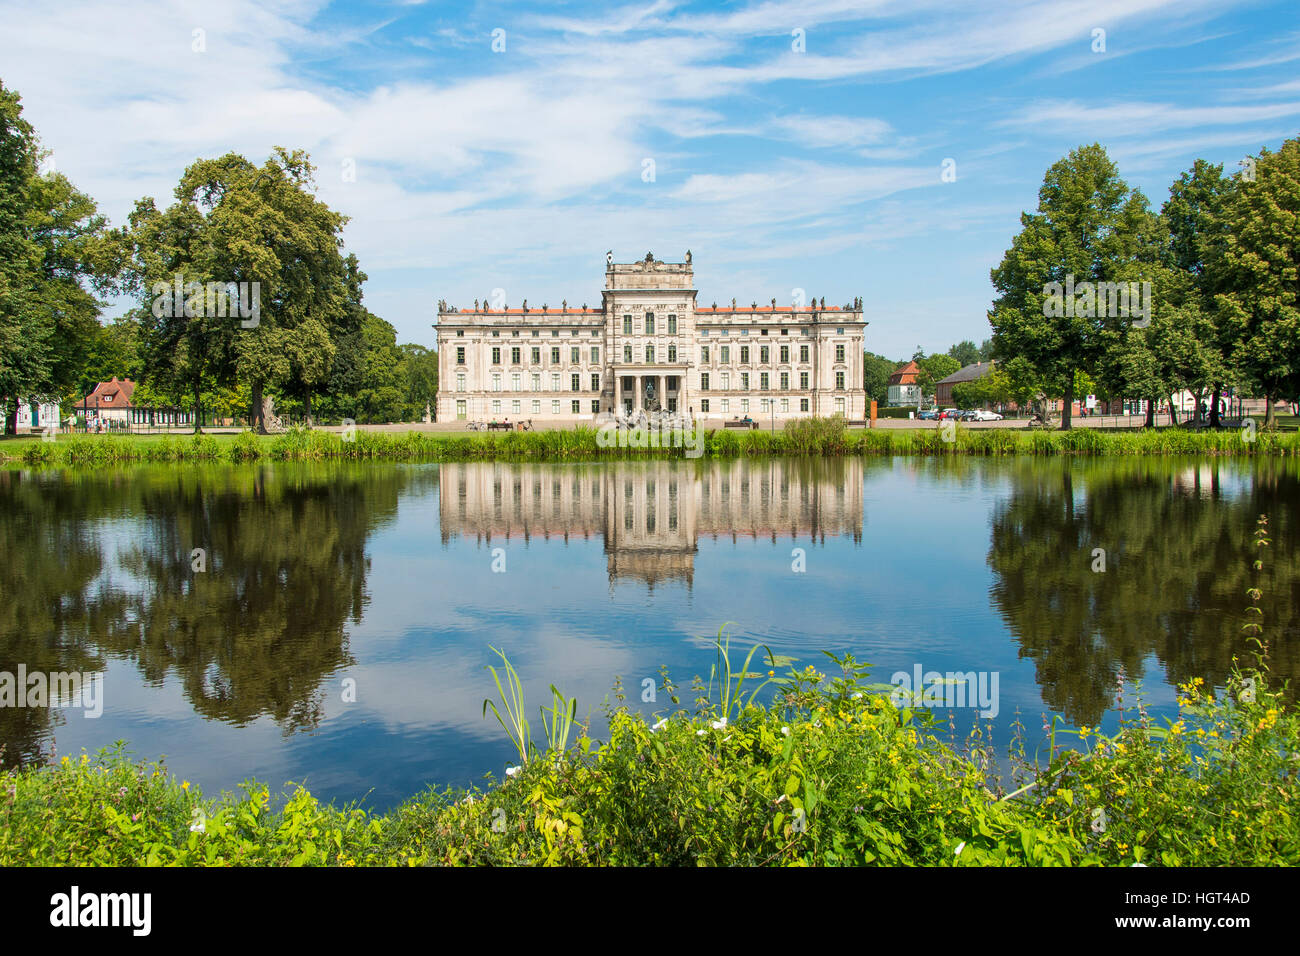 Ludwigslust Castle with pond and water reflection, Ludwigslust, Mecklenburg-Western Pomerania, Germany Stock Photo